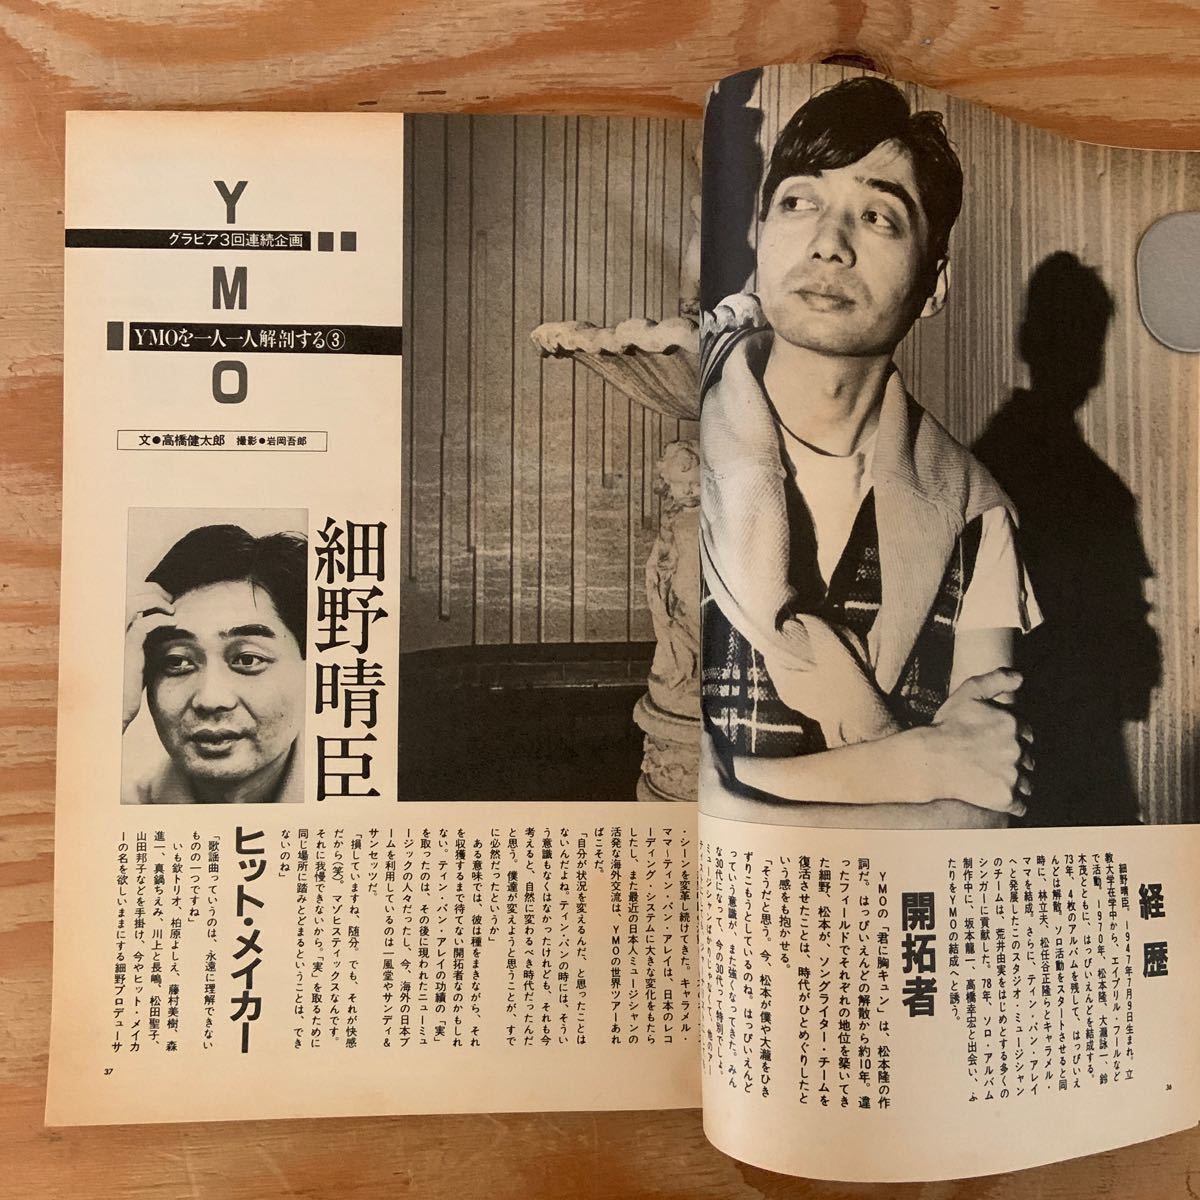 Y90C2-231114 rare [ weekly FM middle * Shikoku * Kyushu version 1983 year 5 month 23 day 80 period. sound .klieito make 5 person. sound. ..... music .. company ]YMO